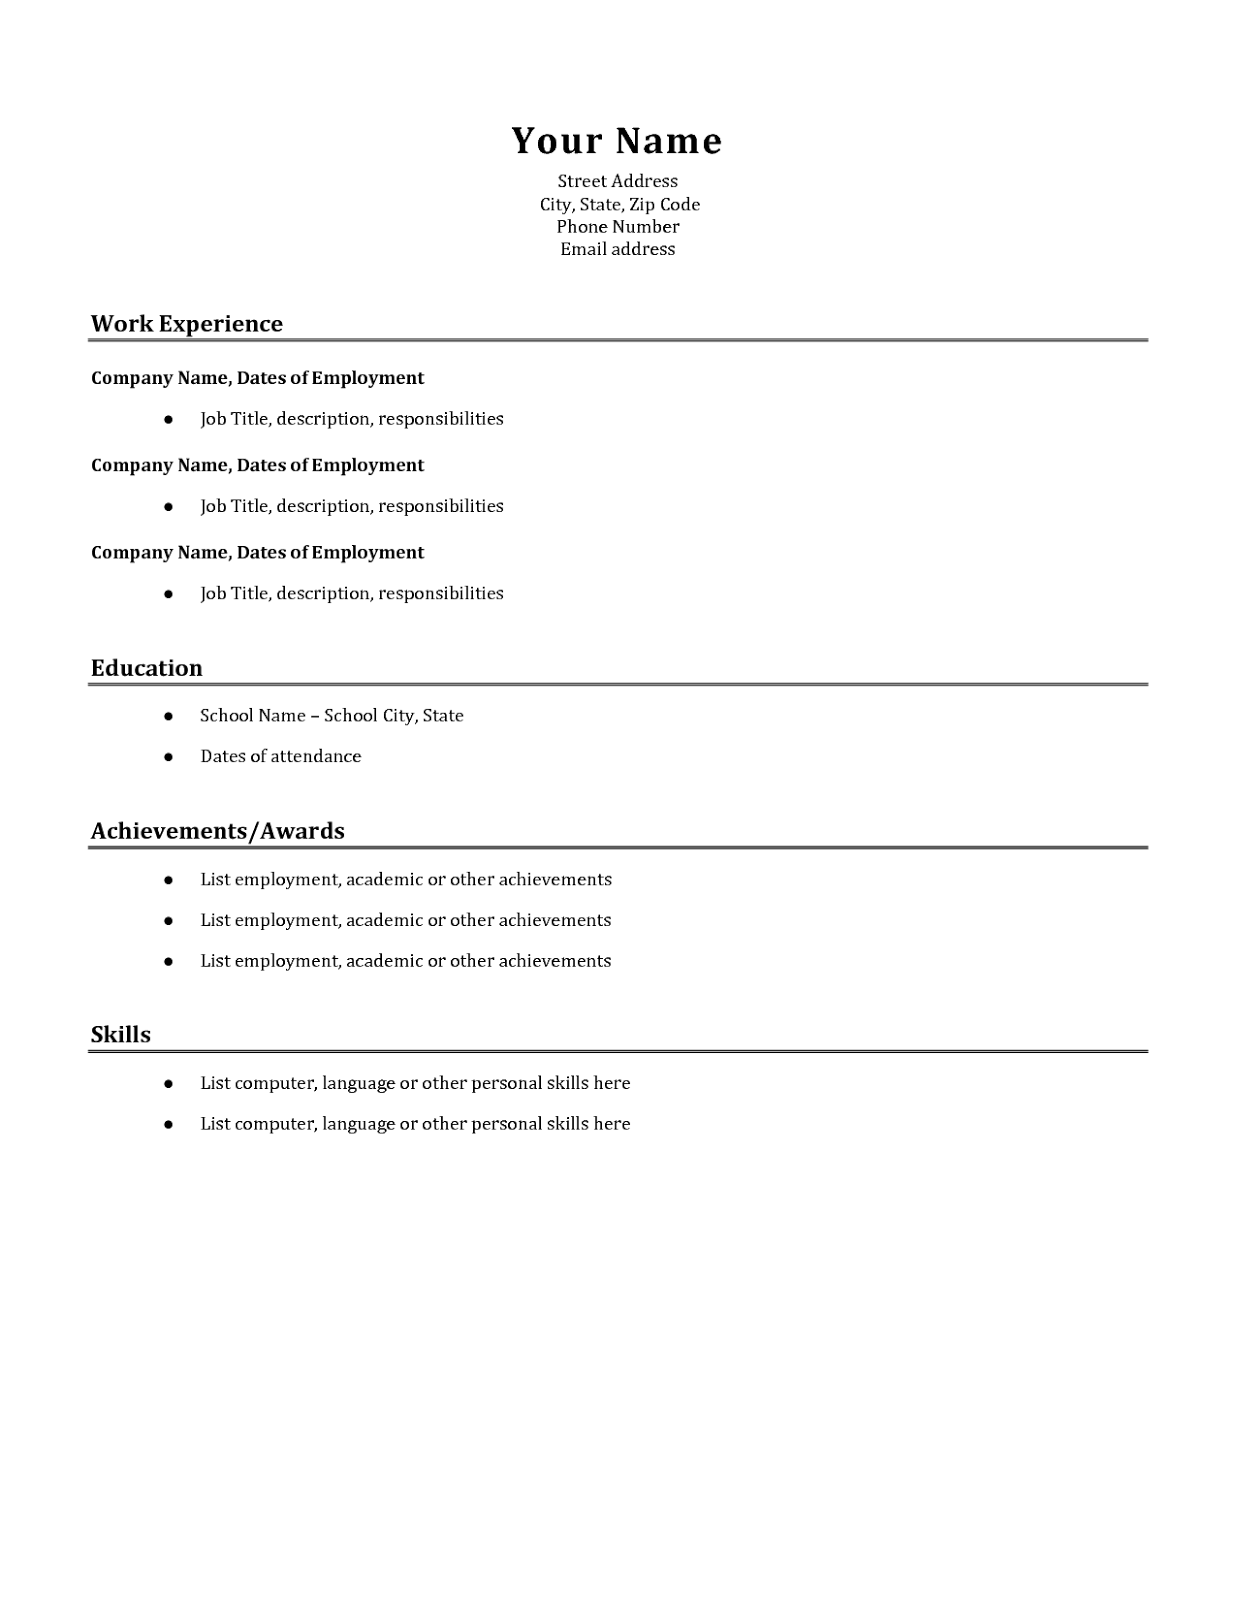 Bad electronic resume example